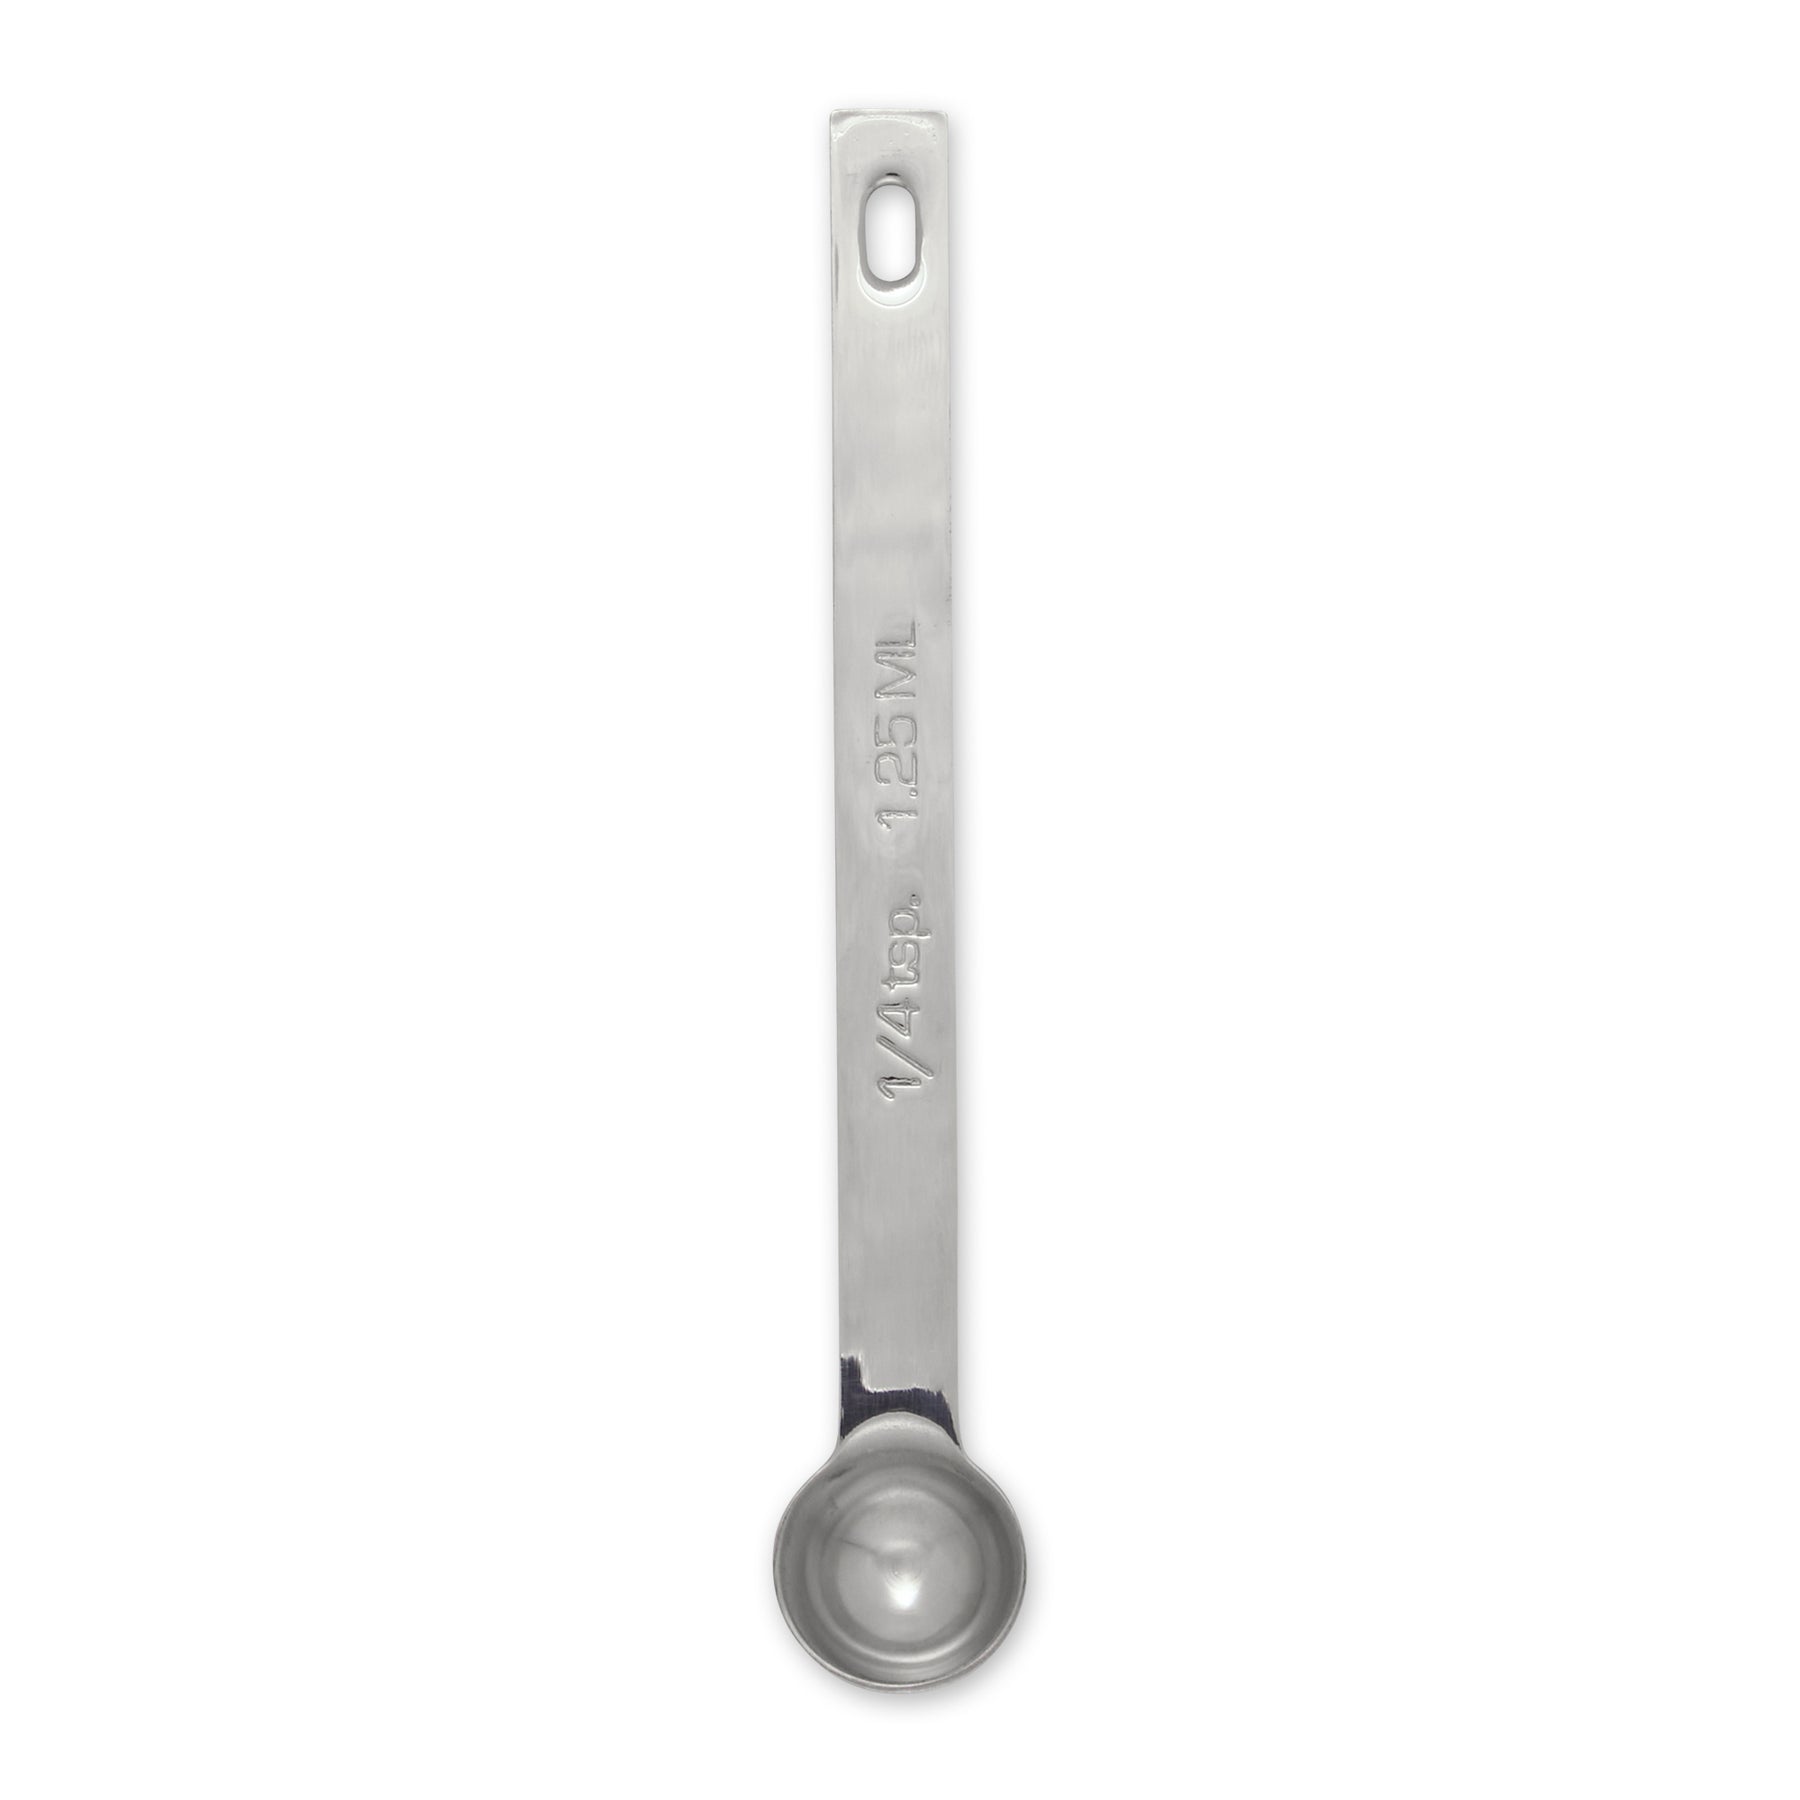 United Scientific Metric Measuring Spoon Set Capacity (English): 1/4 tsp